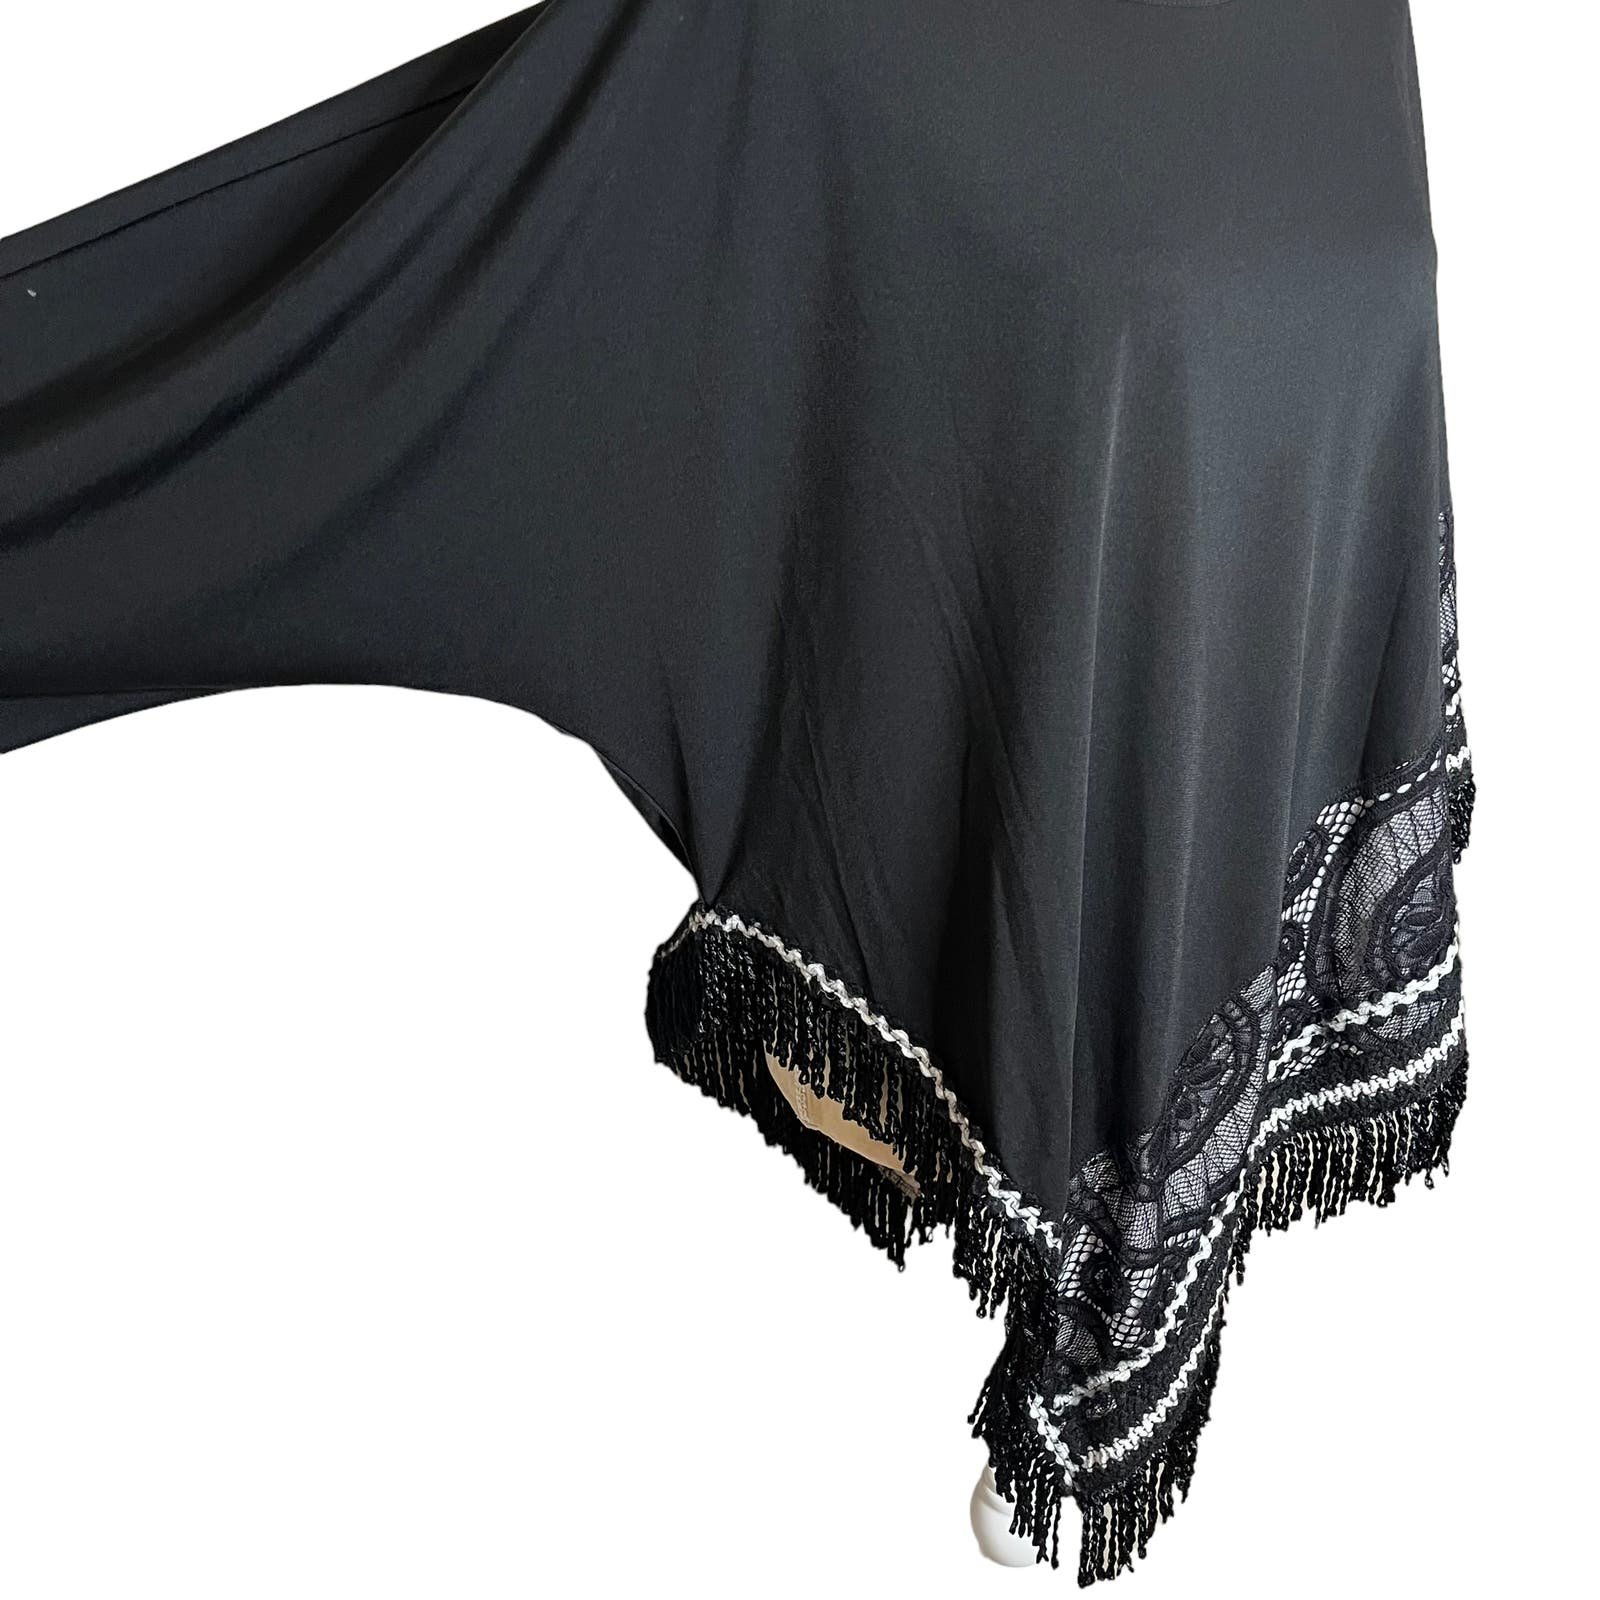 Fashion Dor Dor Couture Poncho Top Blouse Black w/ Fringe Asymmetrical Size Large IgA2MLRYC Store Online